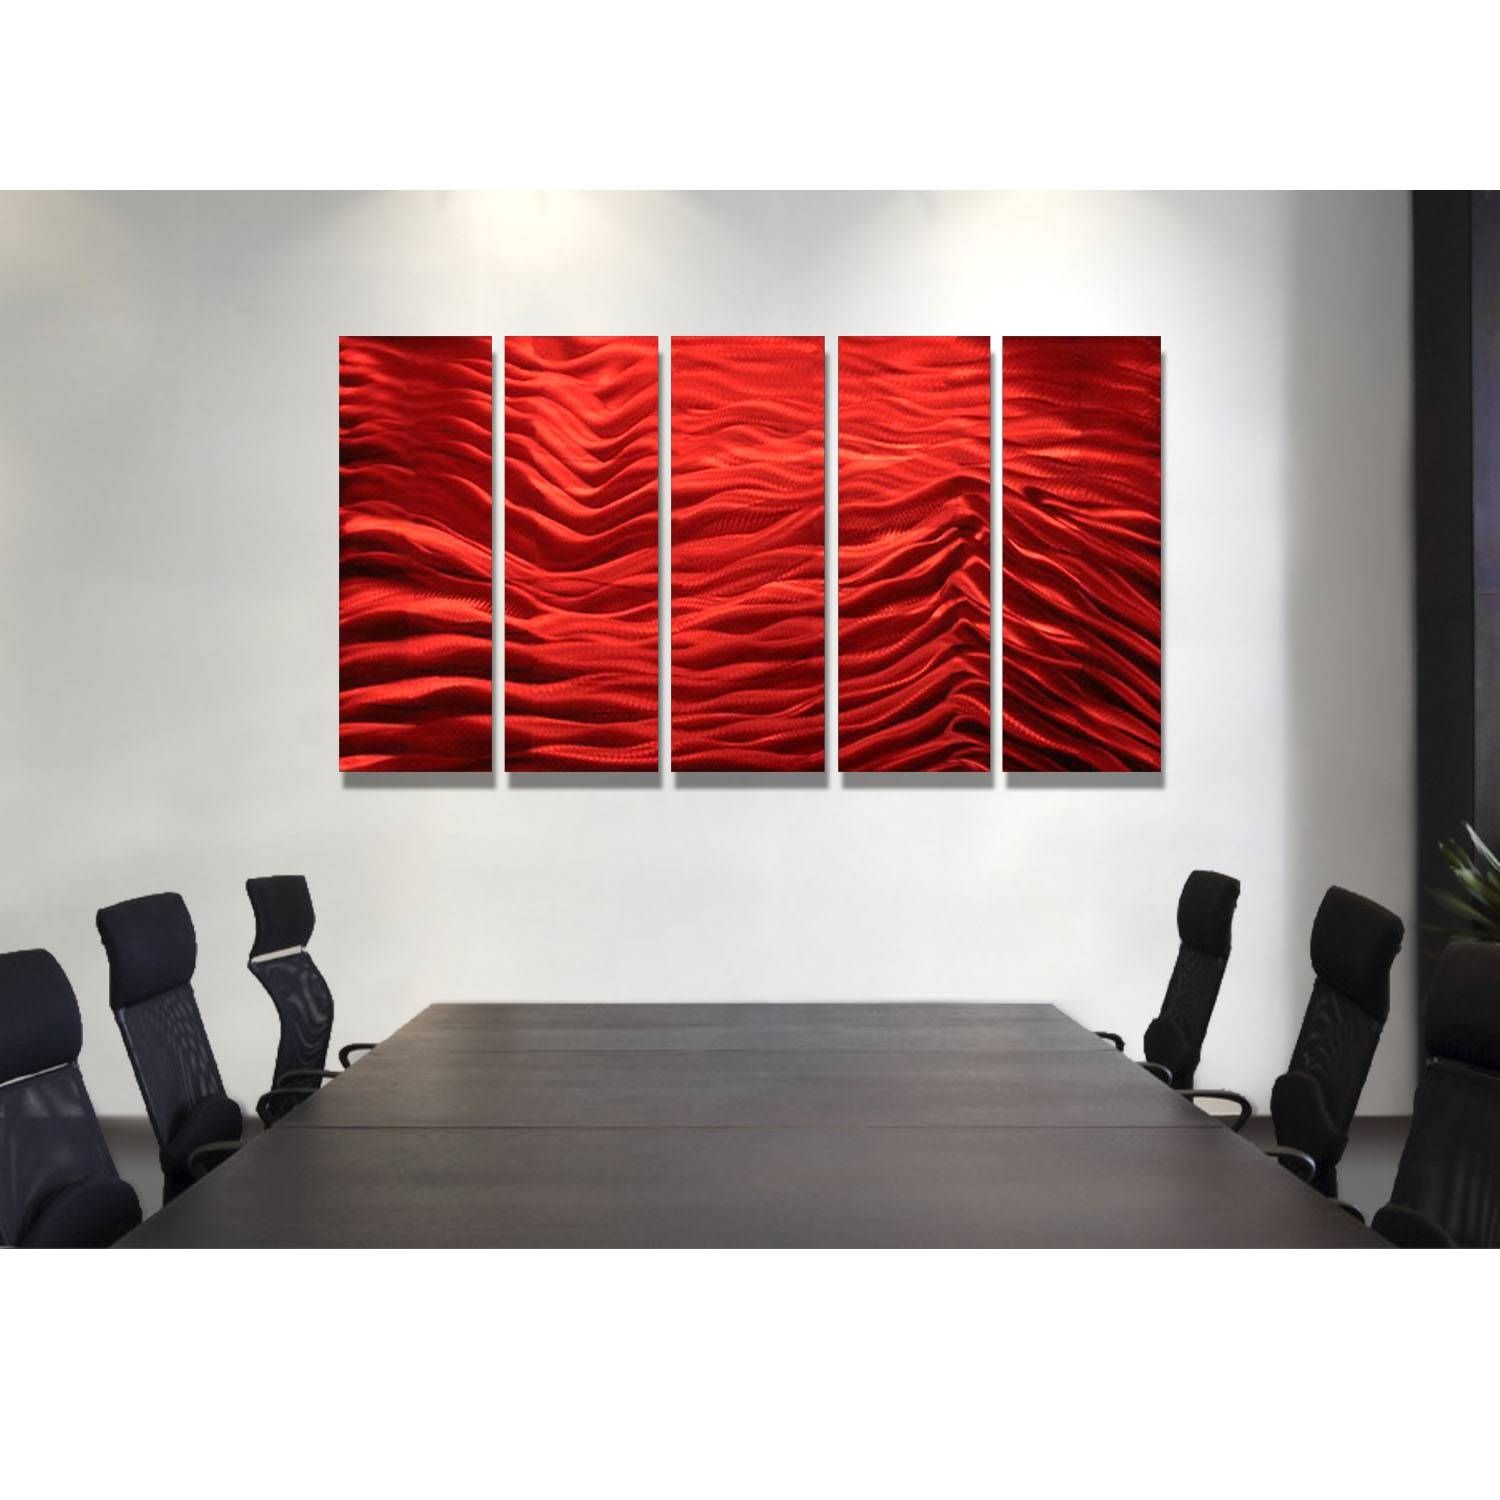 Red Inertia – Red Metal Wall Art – 5 Panel Wall Décorjon Allen Regarding Newest Red Tree Metal Wall Art (View 9 of 20)